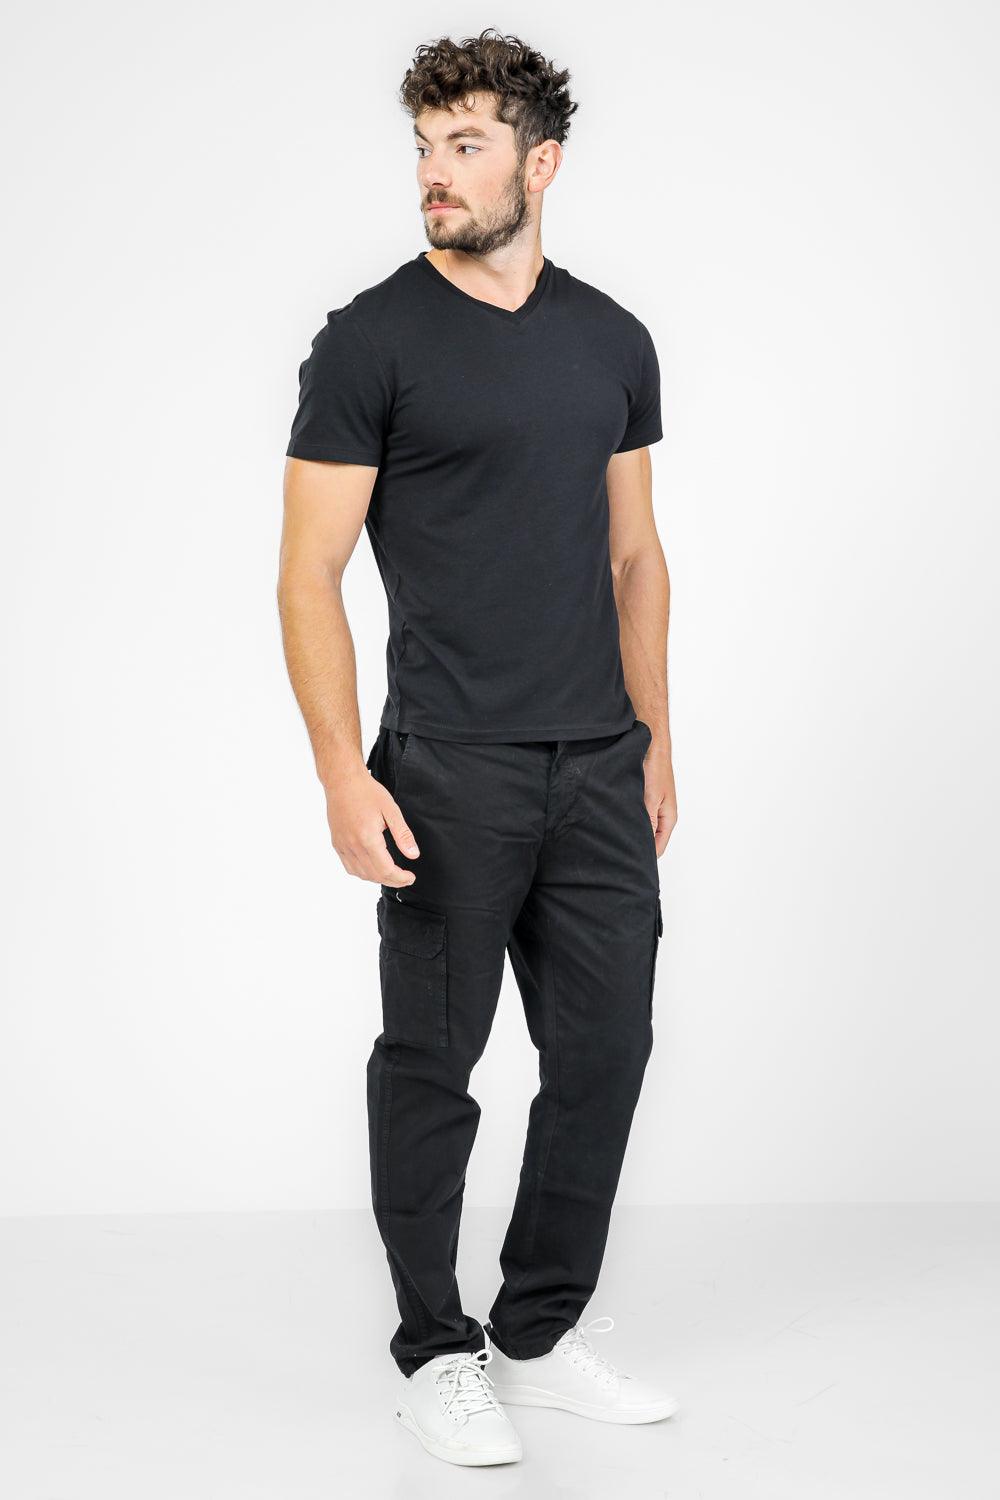 SCORCHER - מכנסי דגמ"ח CLASSIC בצבע שחור - MASHBIR//365